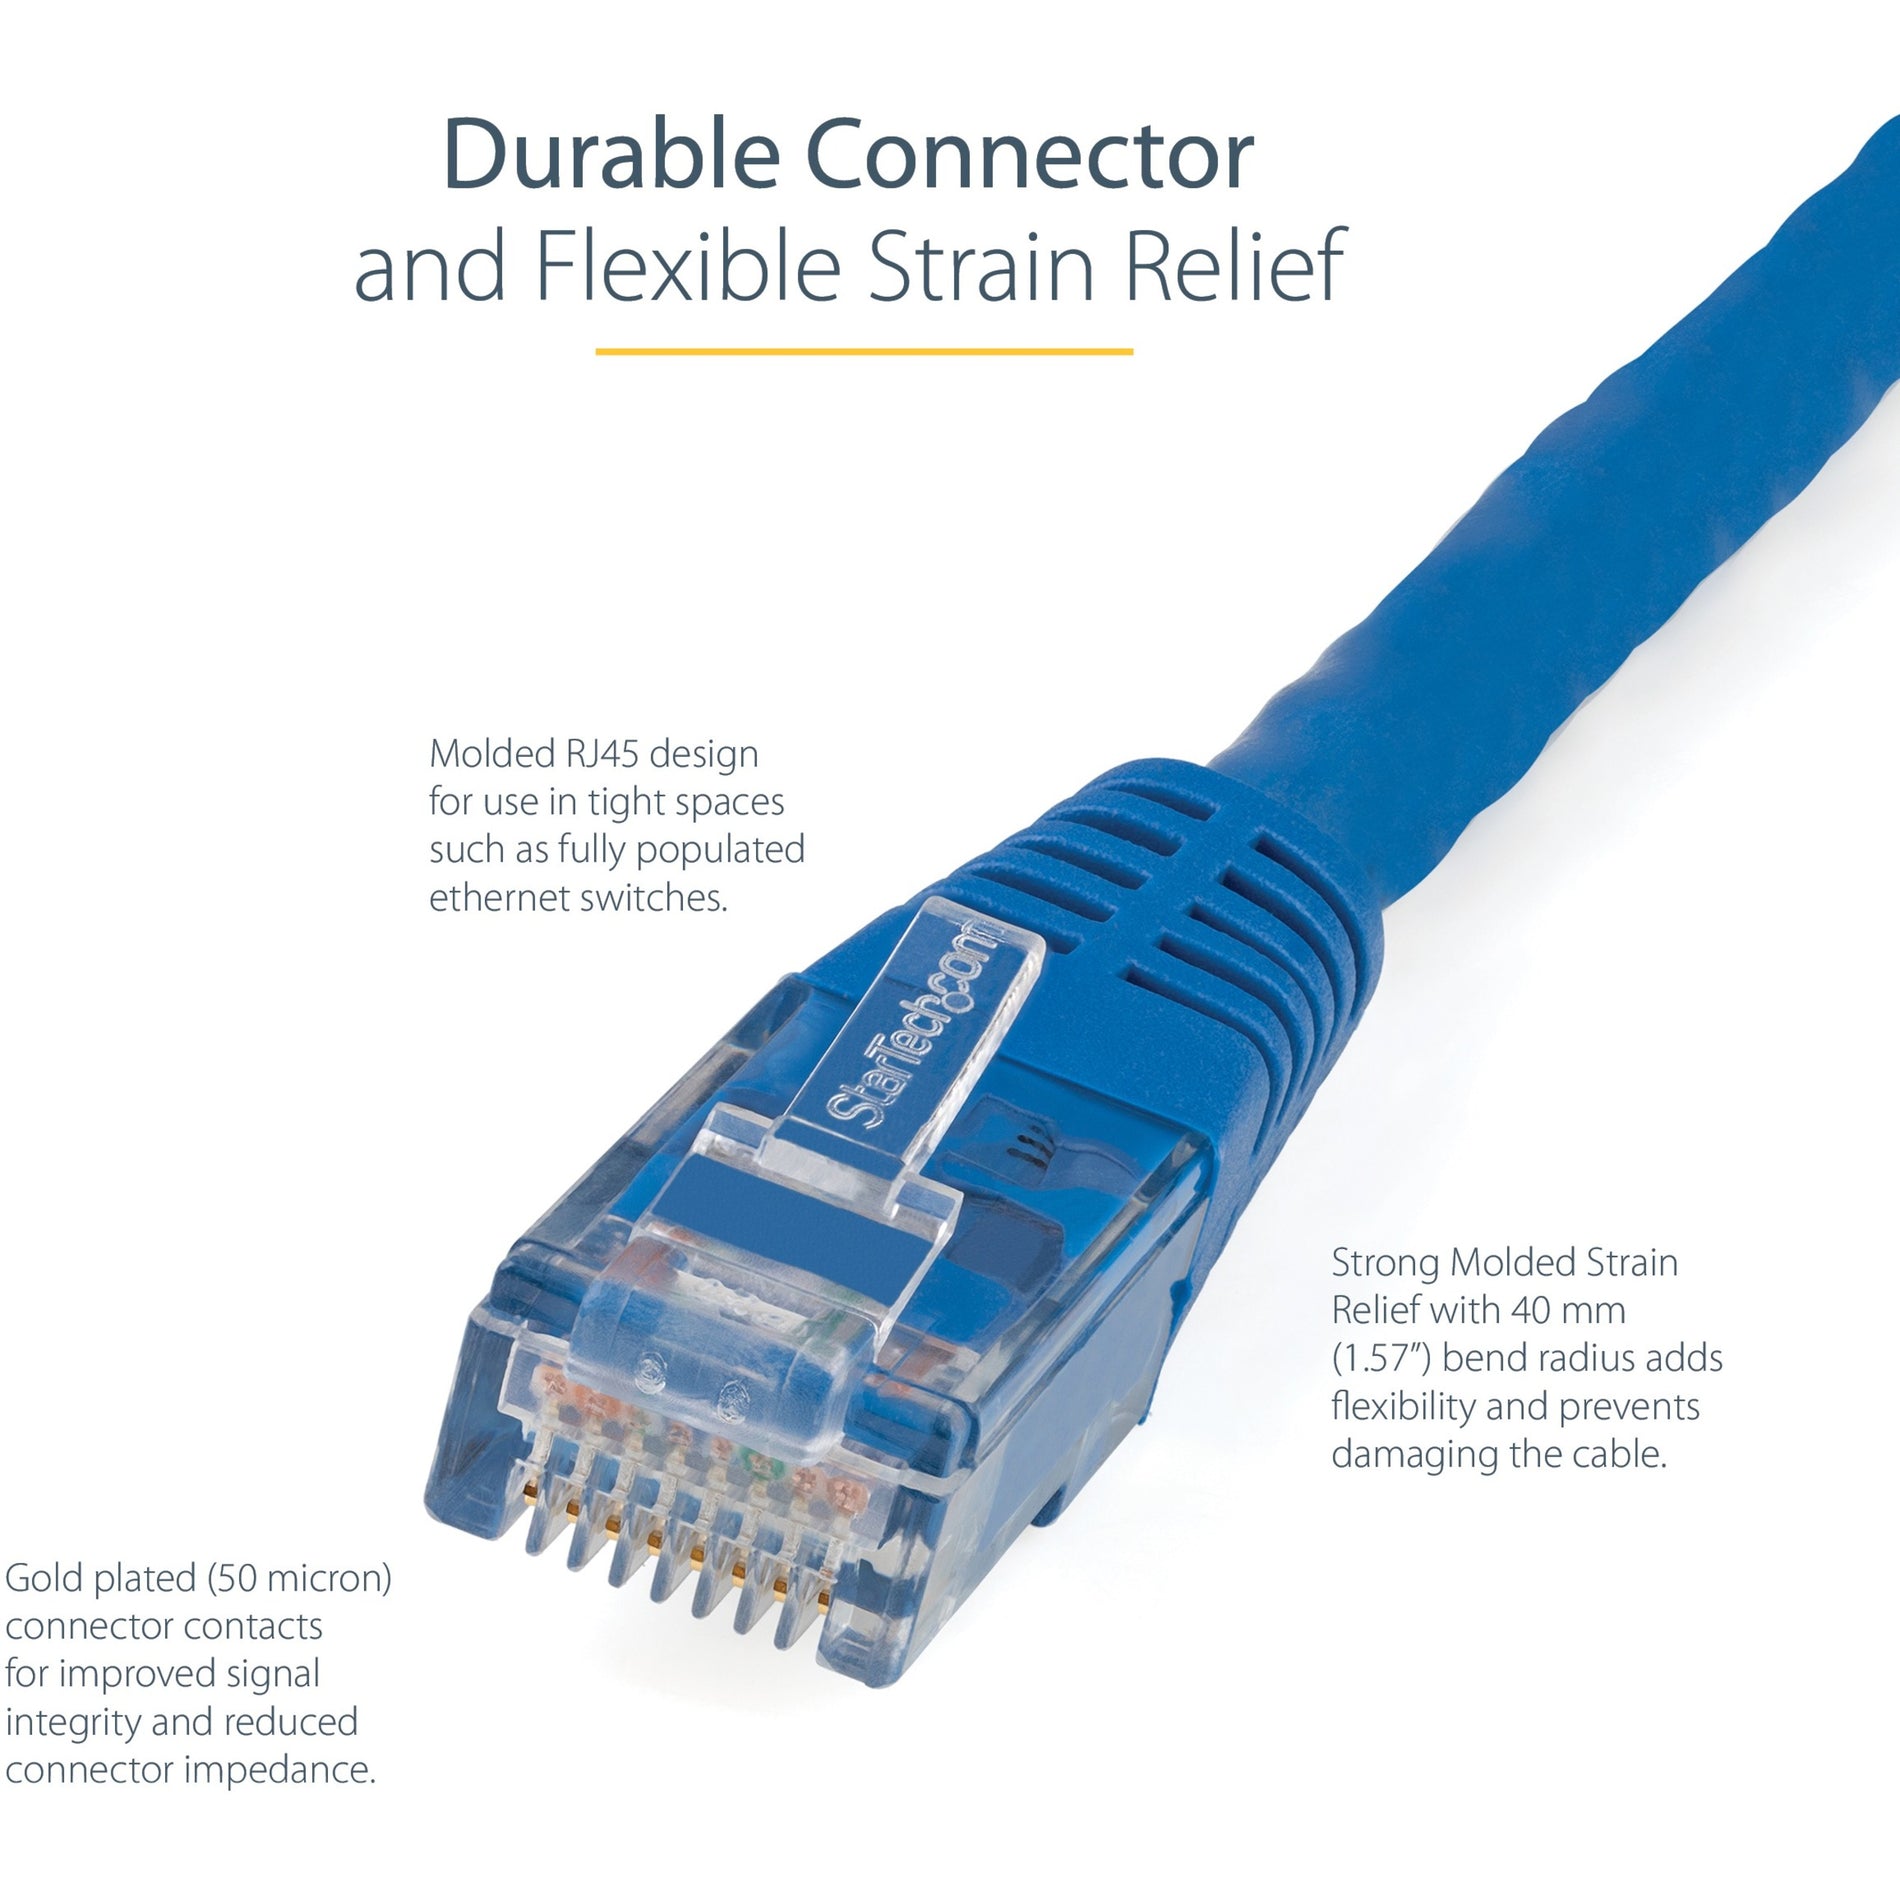 Marca: StarTech.com  Cable de conexión UTP Cat6 azul de 2 pies StarTech.com C6PATCH2BL verificado por ETL velocidad de transferencia de datos de 10 Gbit/s alivio de tensión